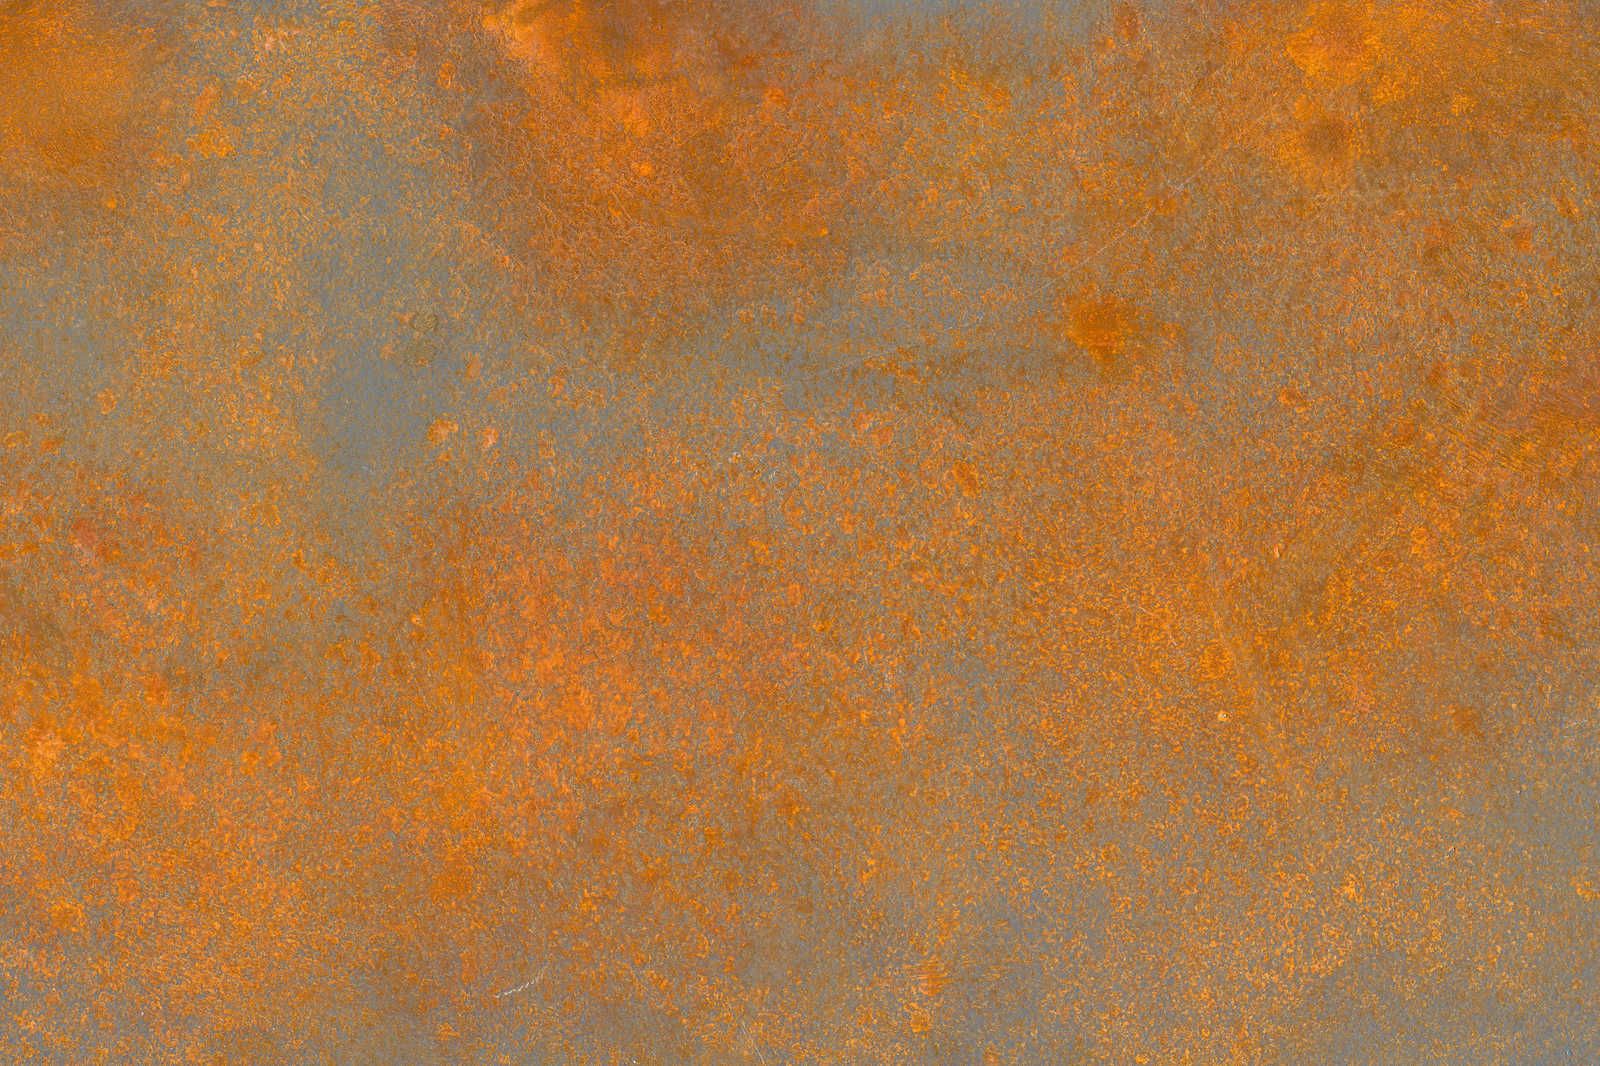             Rostoptik Leinwandbild Orange Braun mit Used Look – 1,20 m x 0,80 m
        